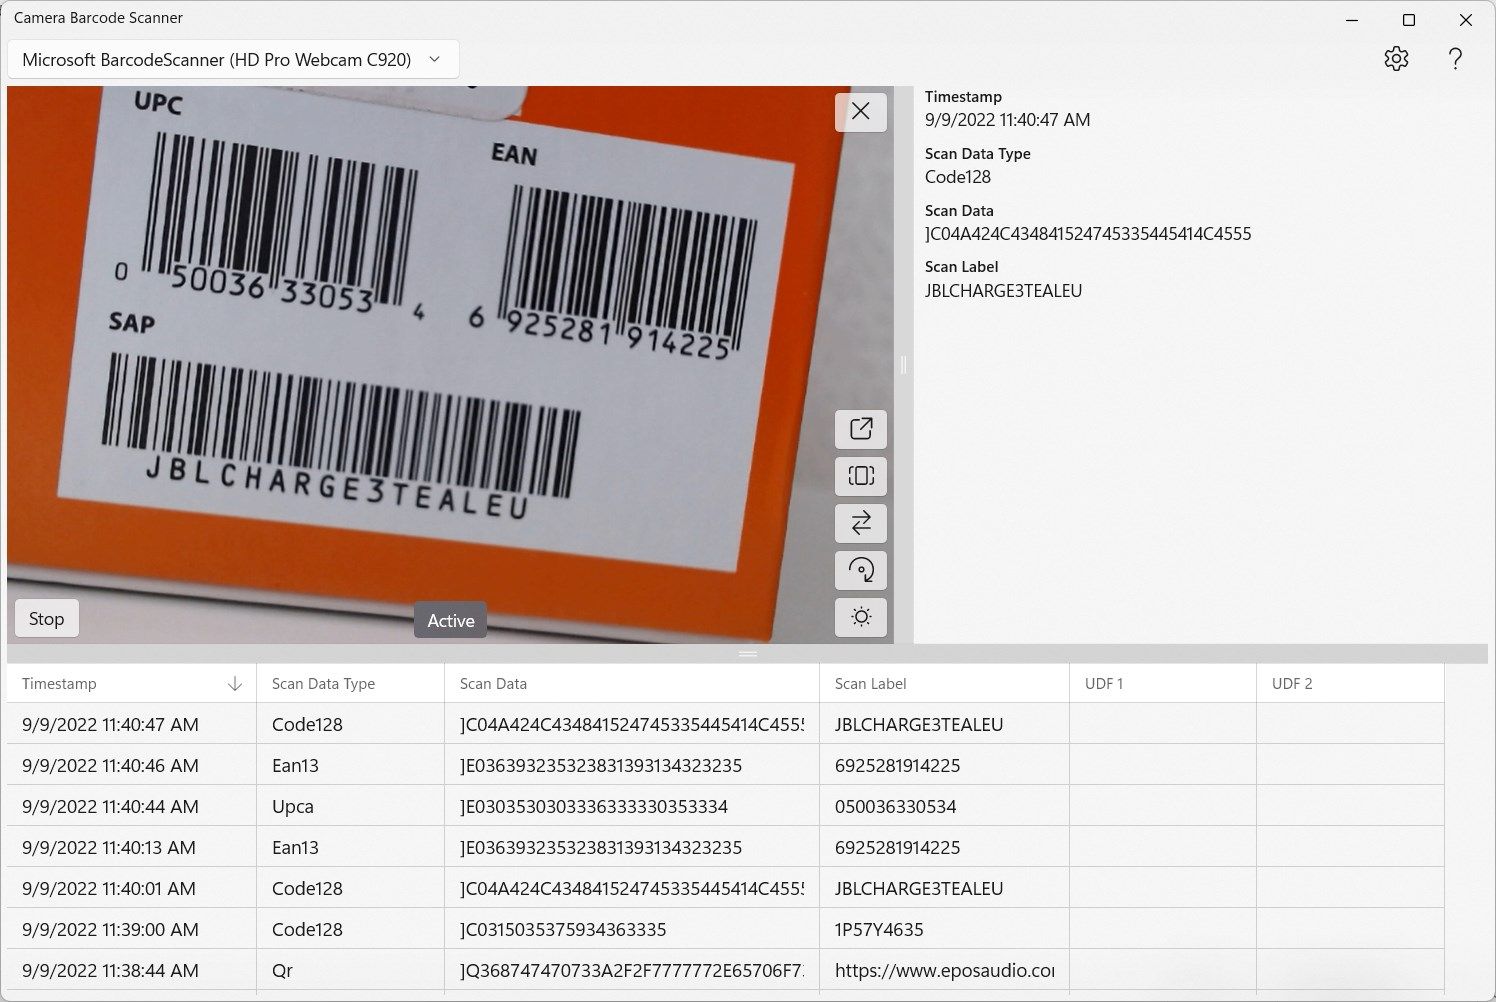 Camera Barcode Scanner